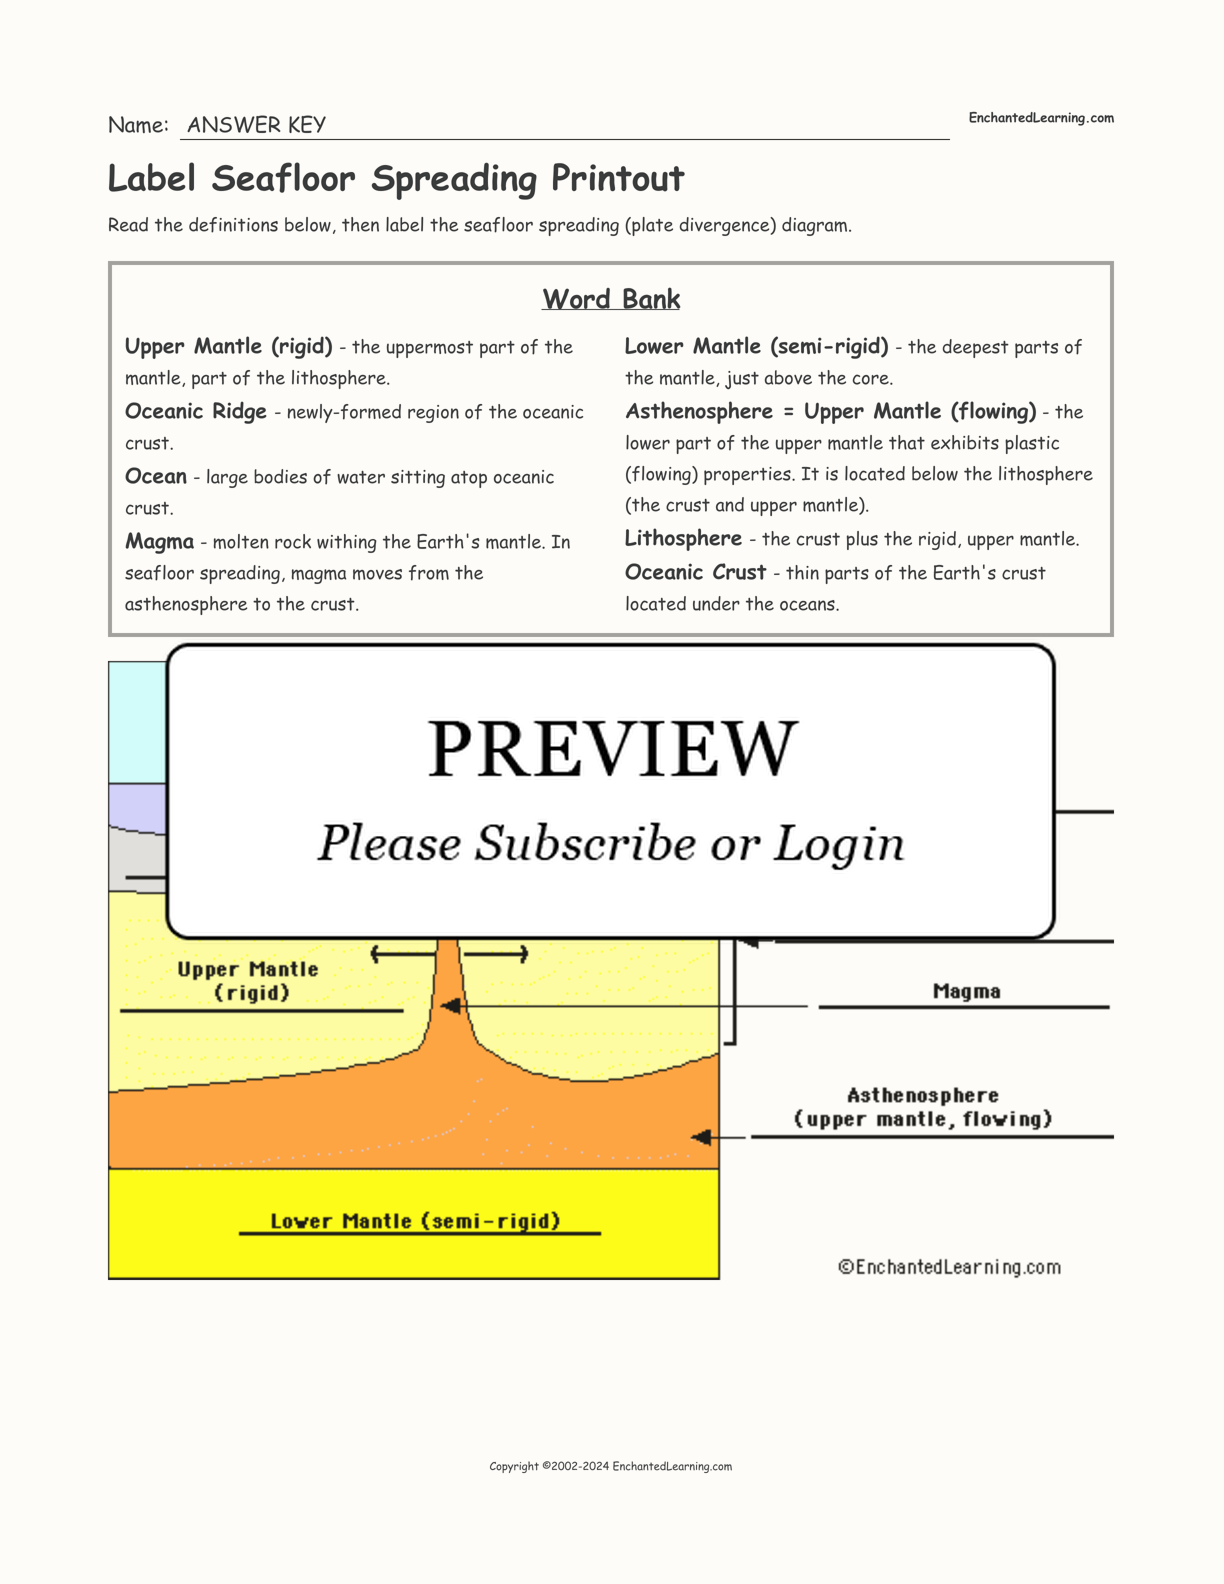 Label Seafloor Spreading Printout interactive worksheet page 2